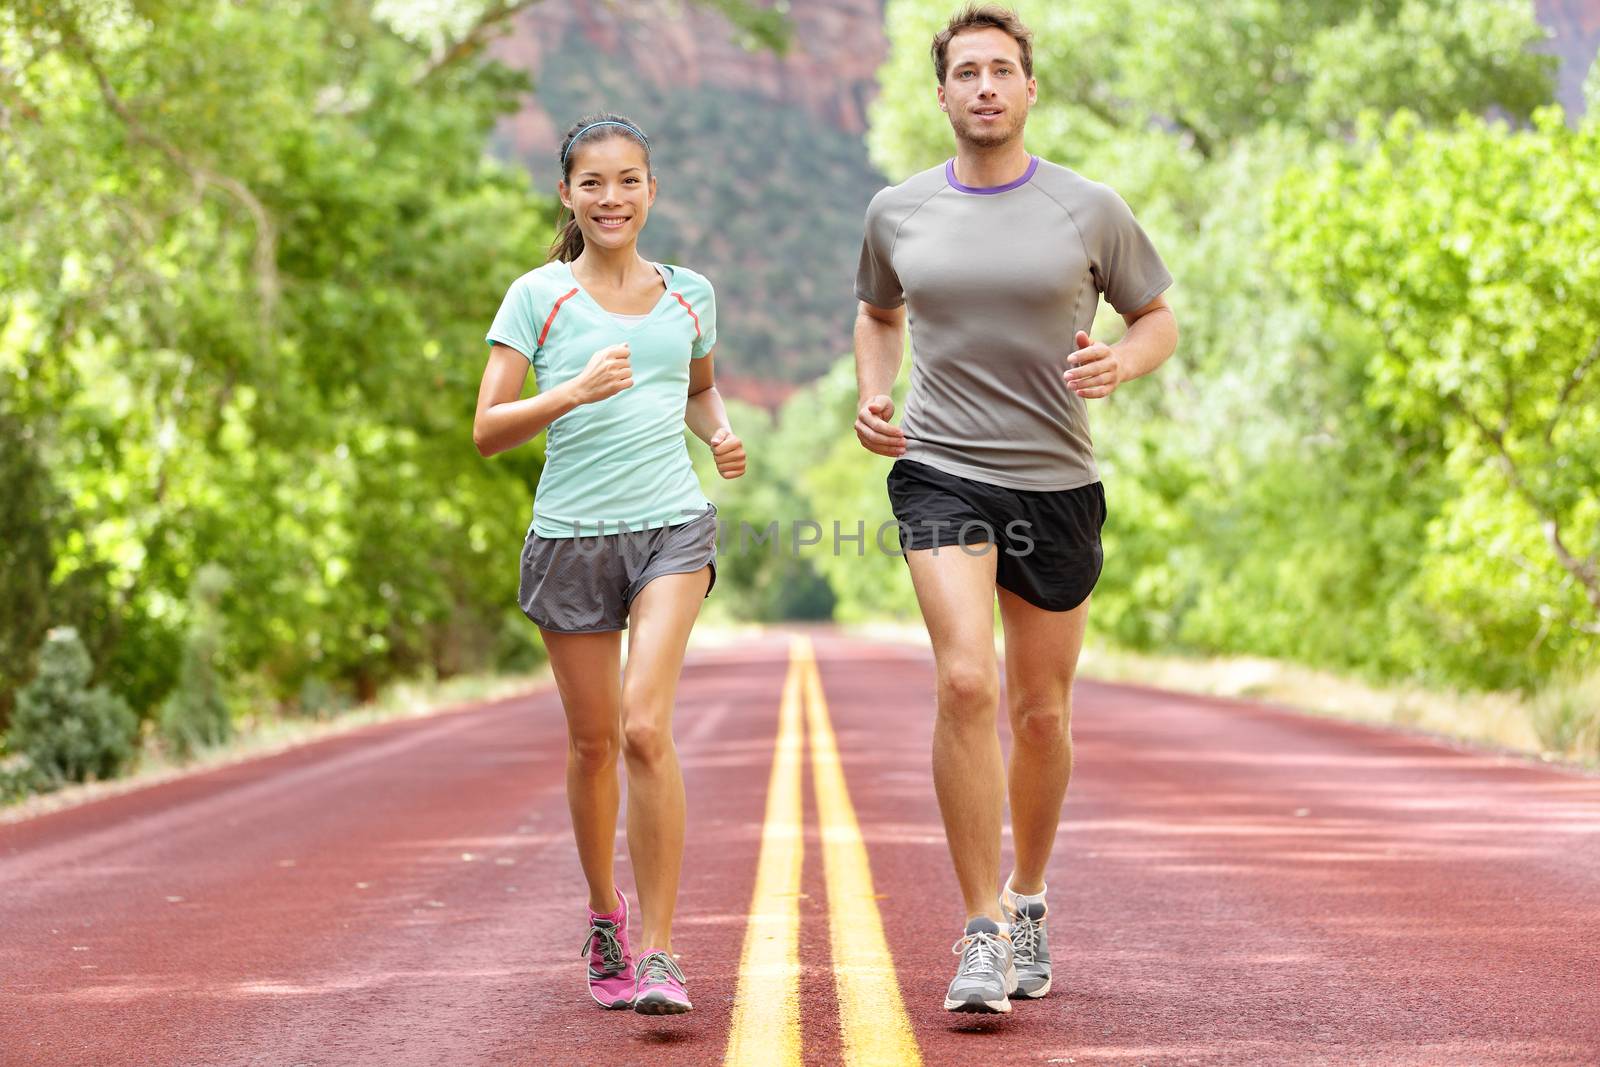 Running Health and fitness - runners jogging by Maridav